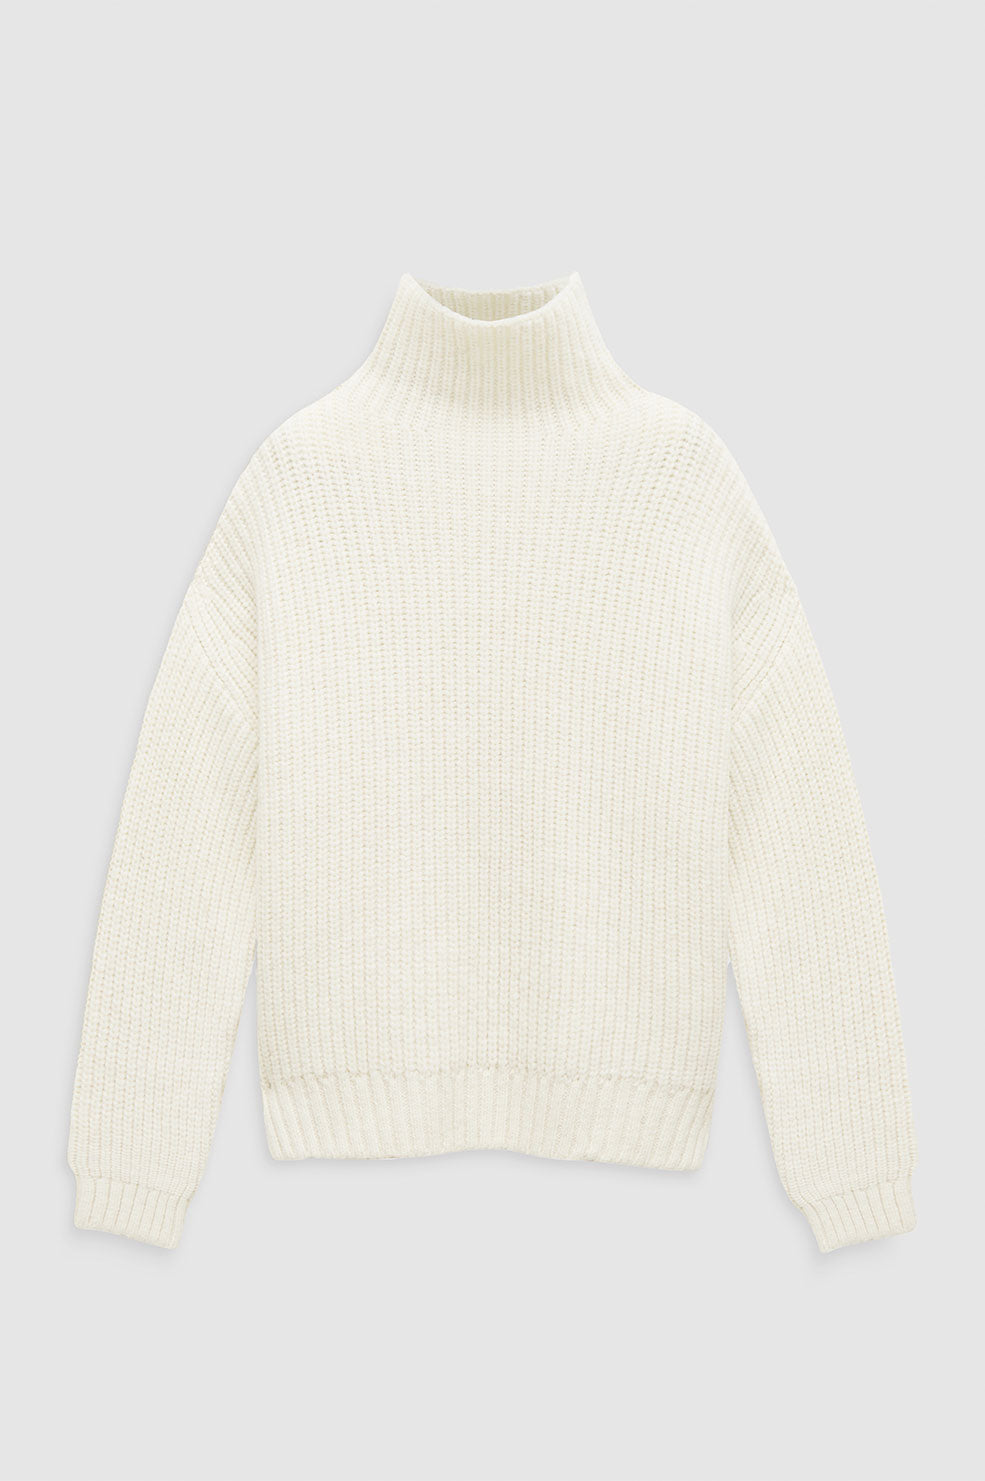 ANINE BING Sydney Sweater - Cream - Front View